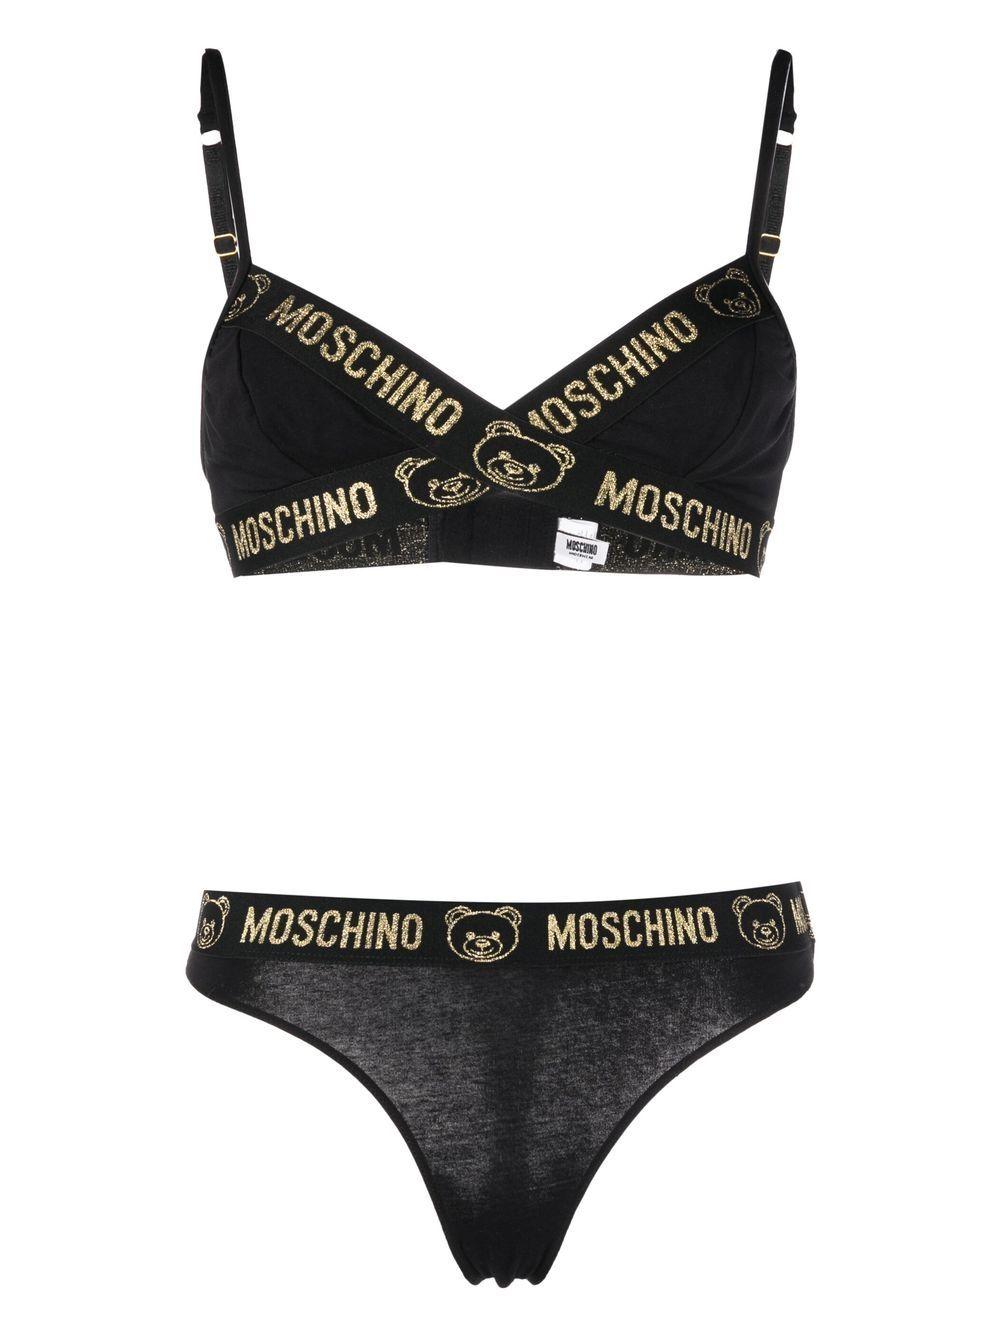 https://cdna.lystit.com/photos/farfetch/cffcdc22/moschino-black-Logo-waistband-Bra-And-Thong-Set.jpeg